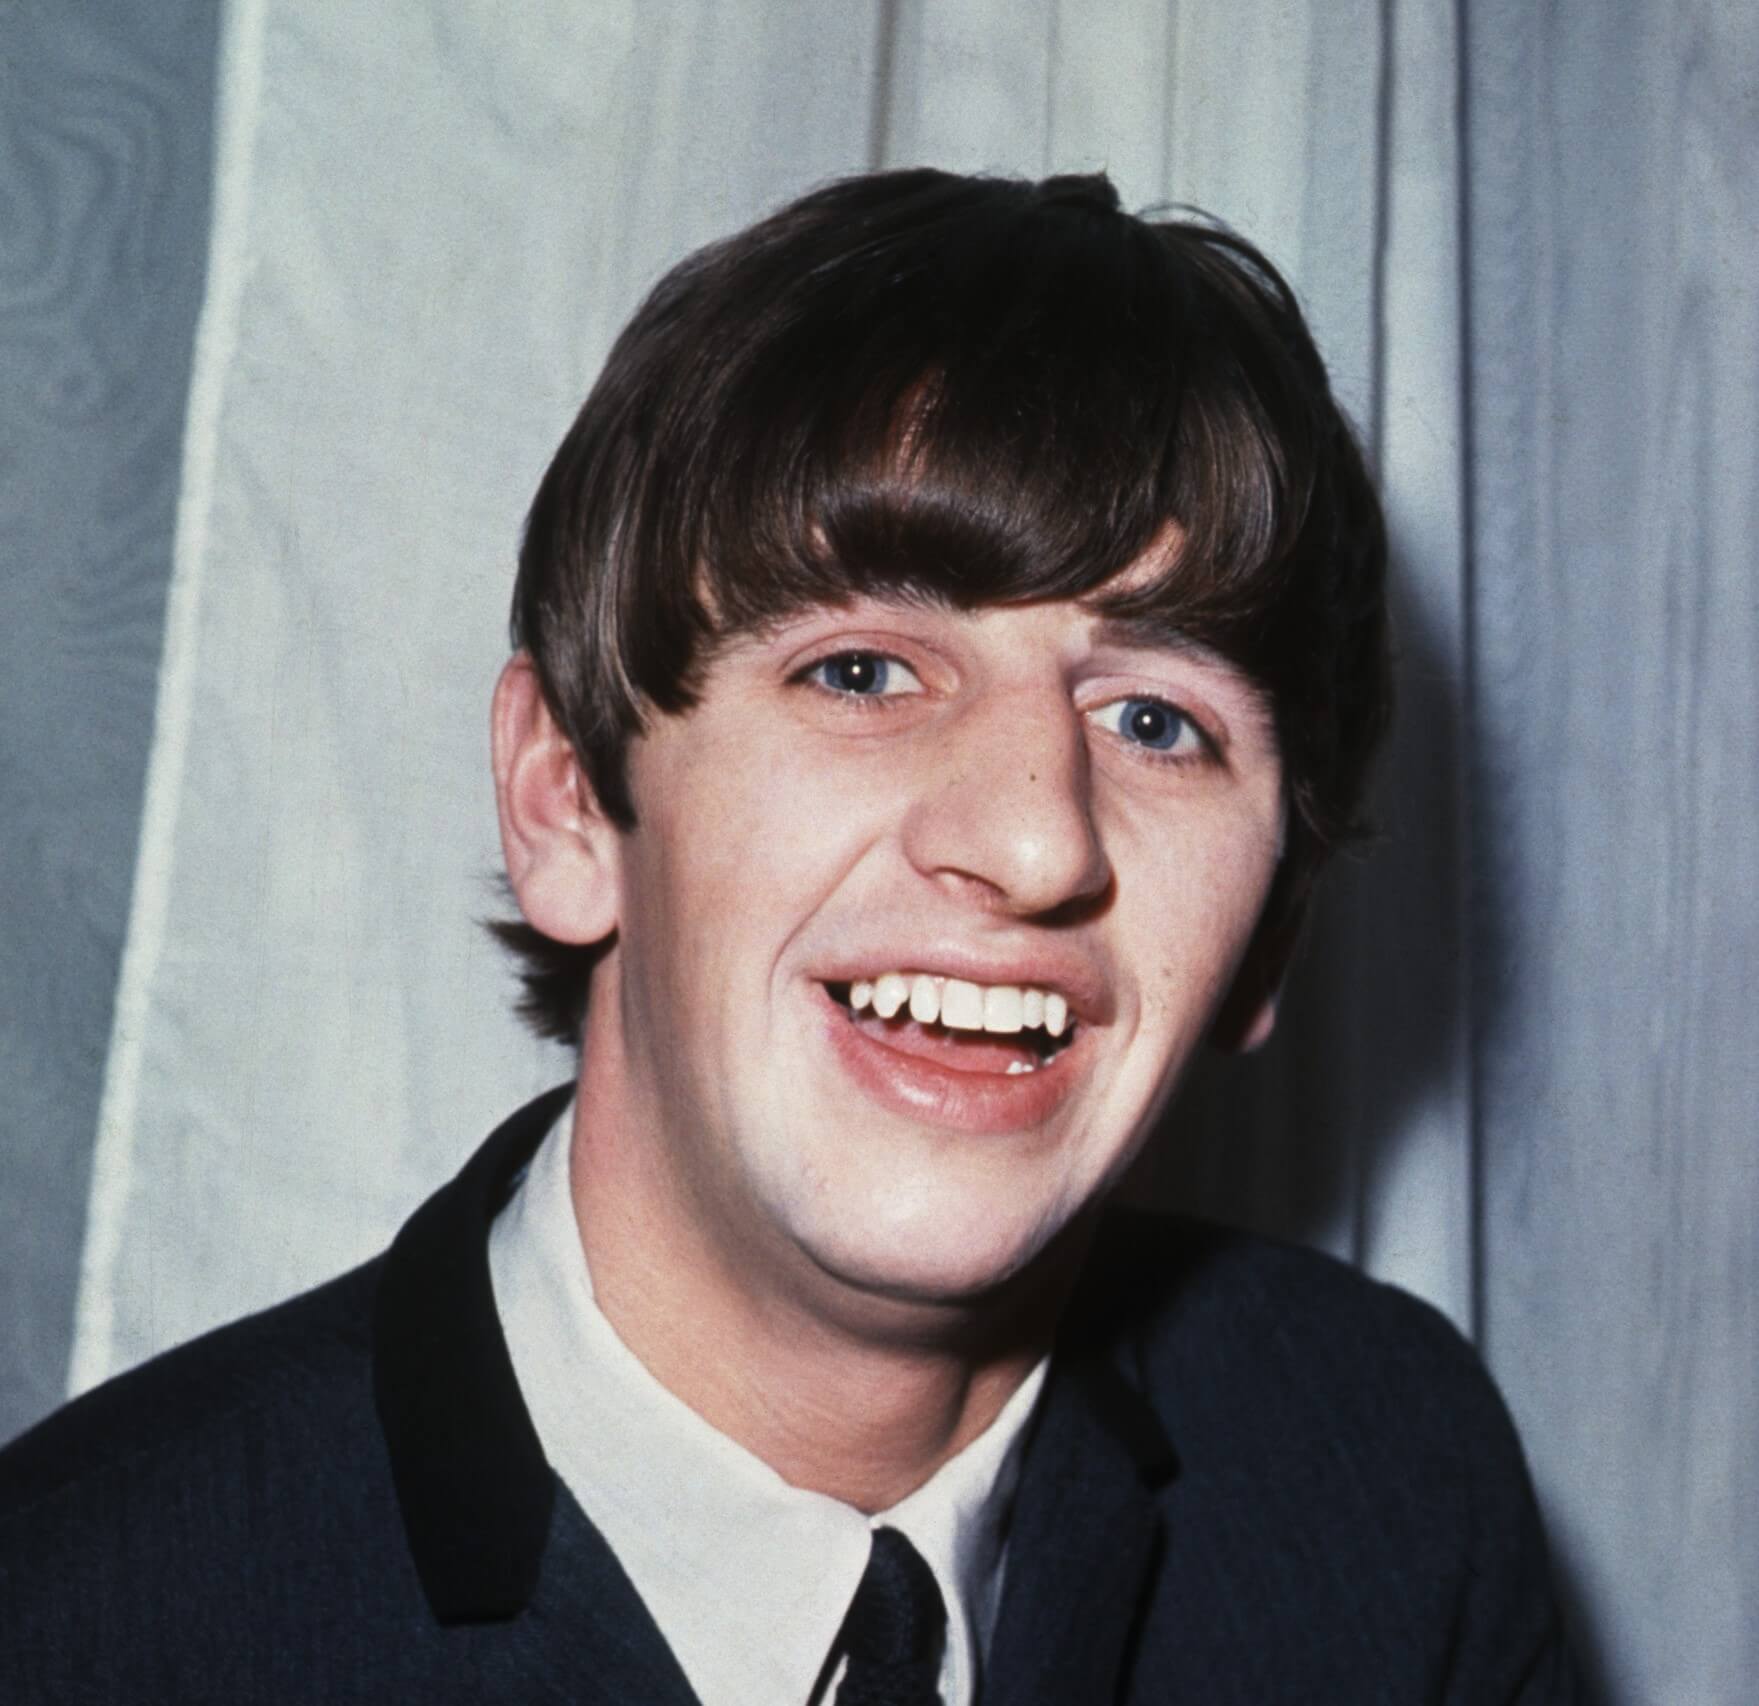 The Beatles' Ringo Starr smiling